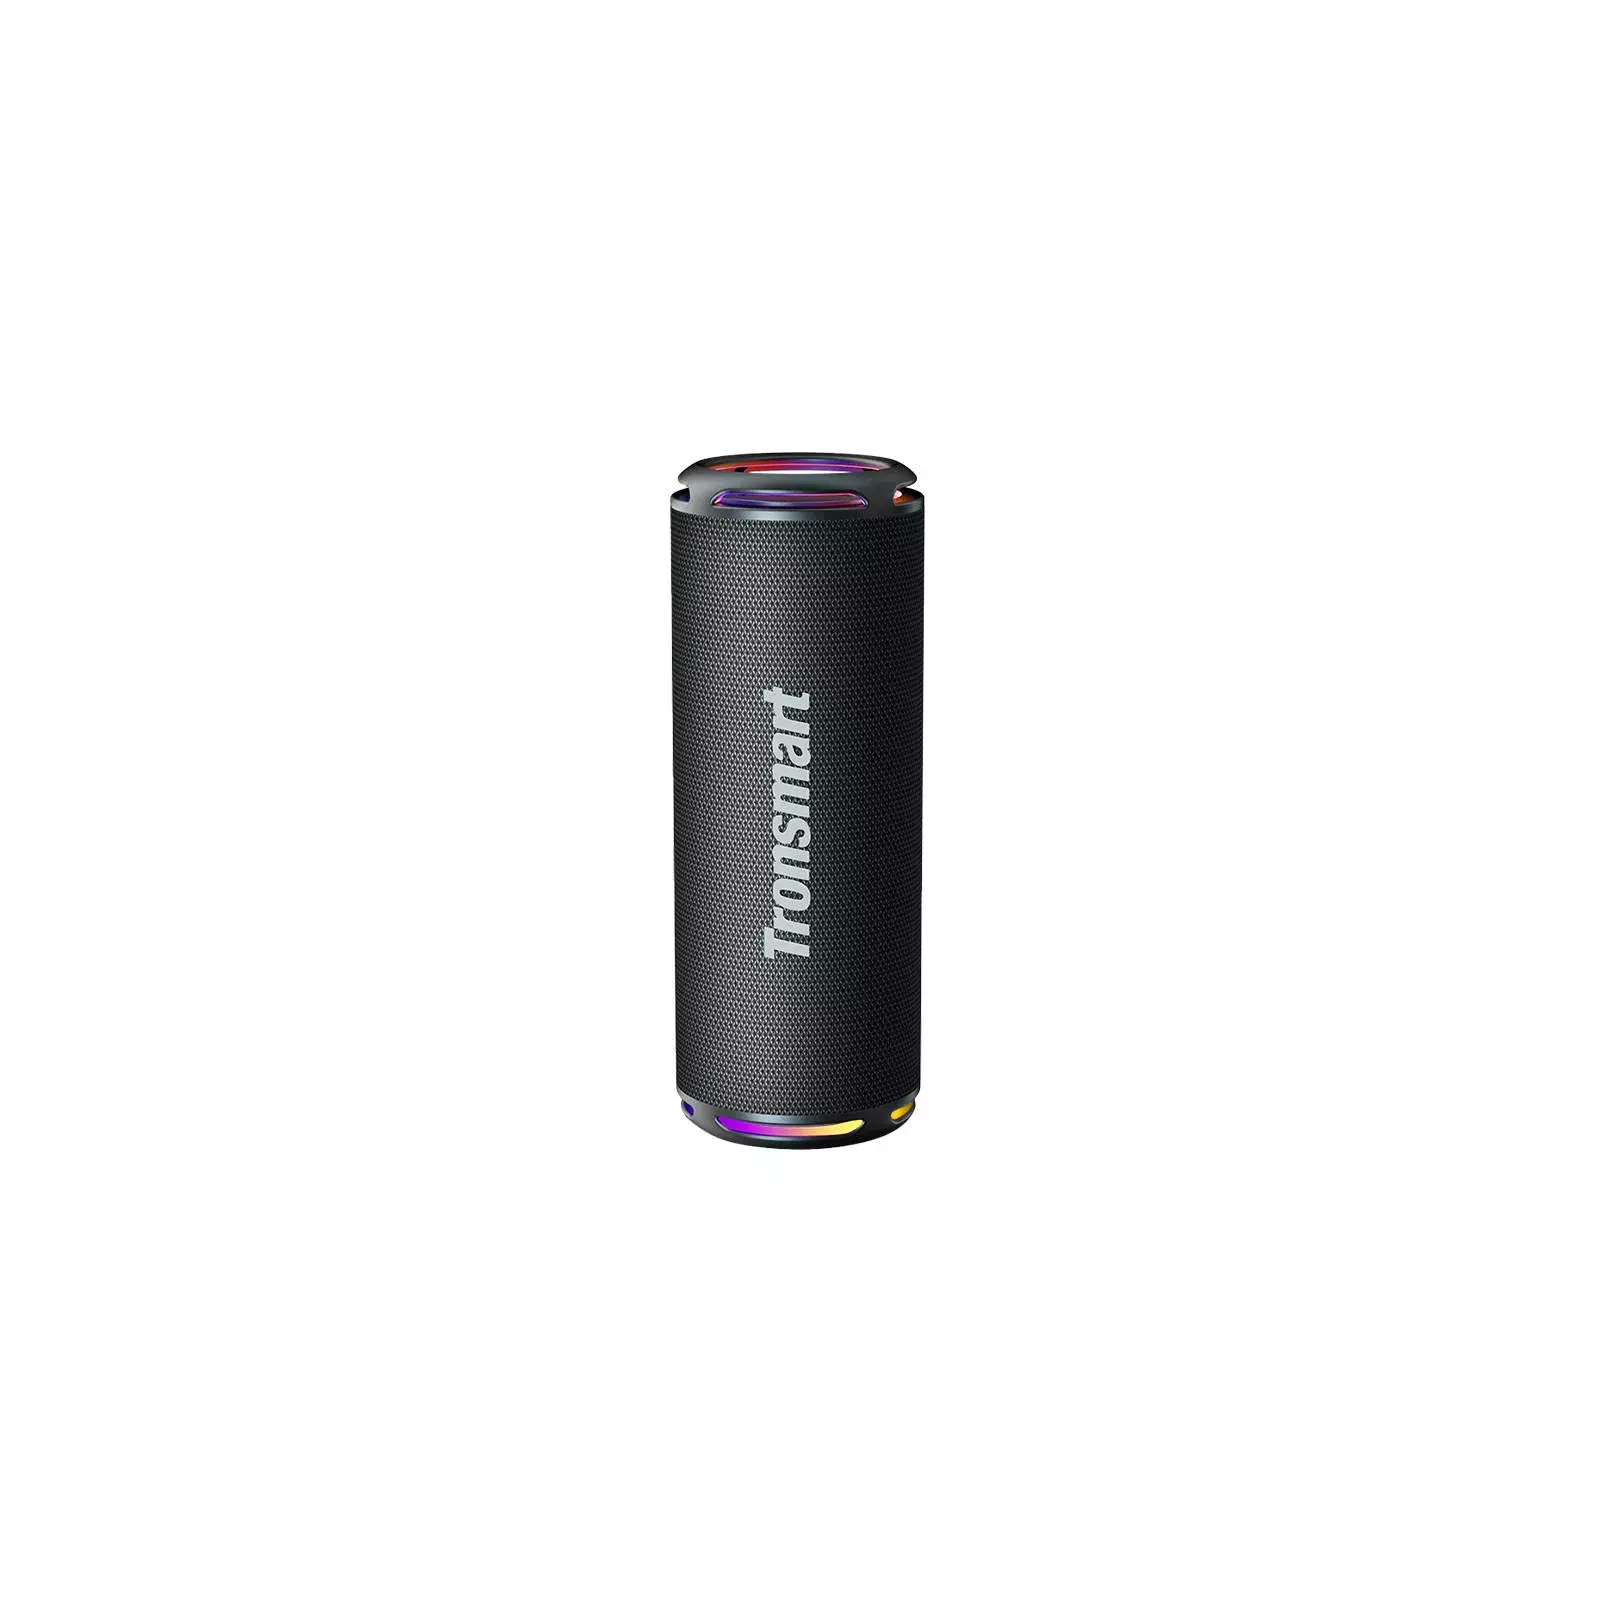 Tronsmart T7 Lite Bluetooth Speaker with LED Light - Wireless Portable LED  Modes